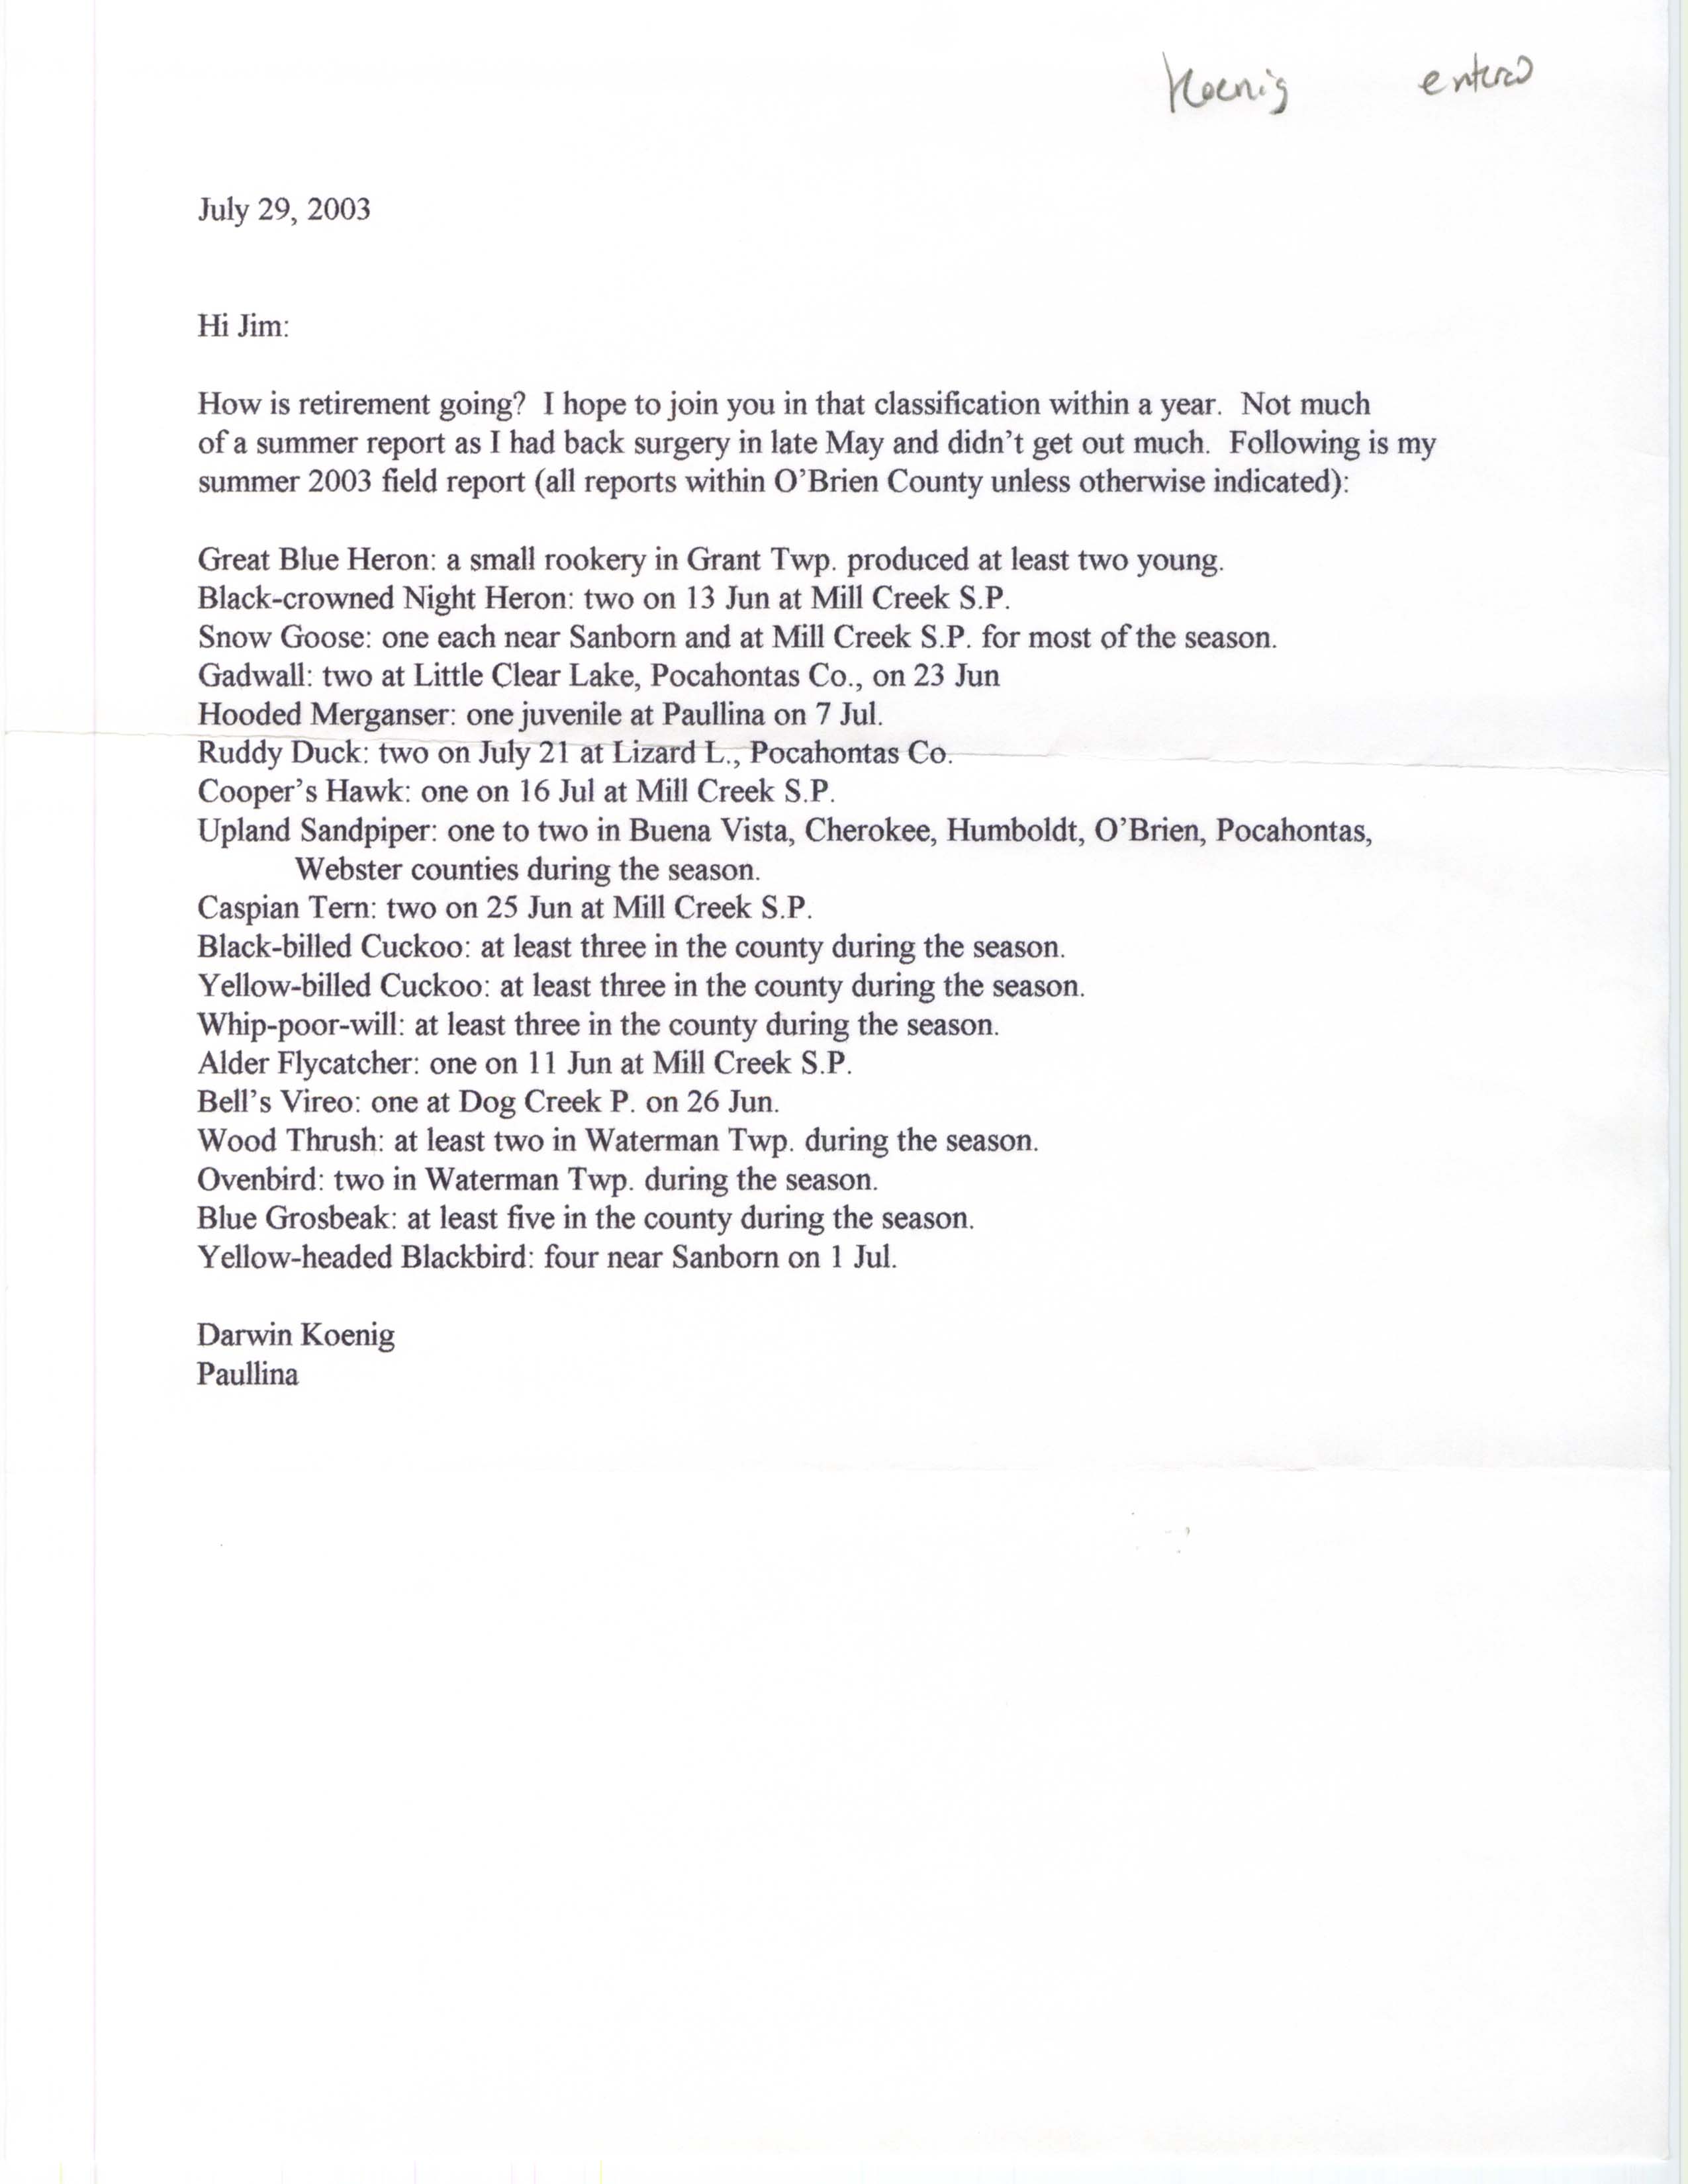 Darwin Koenig letter to James J. Dinsmore regarding bird sightings, July 29,  2003